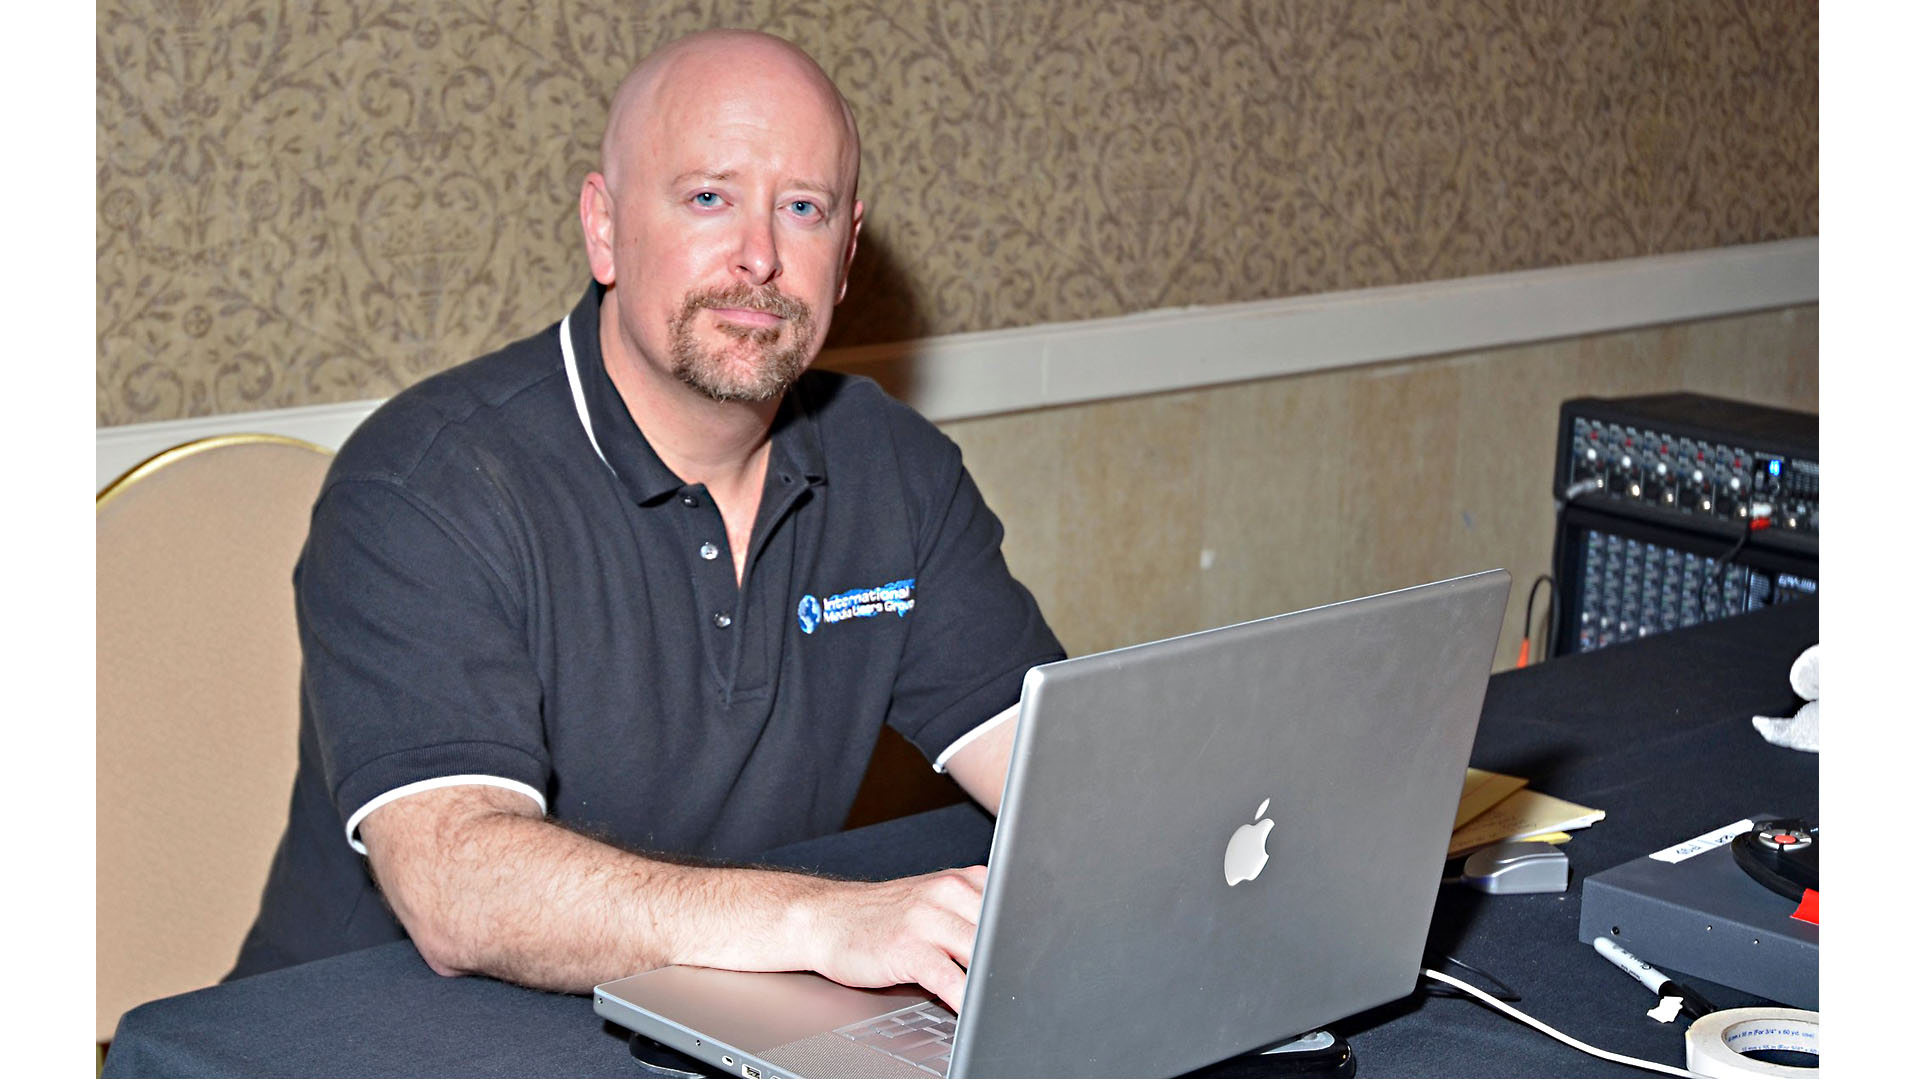 Chris Rogers (Owner/Operator of CHRMEDIA) working on laptop